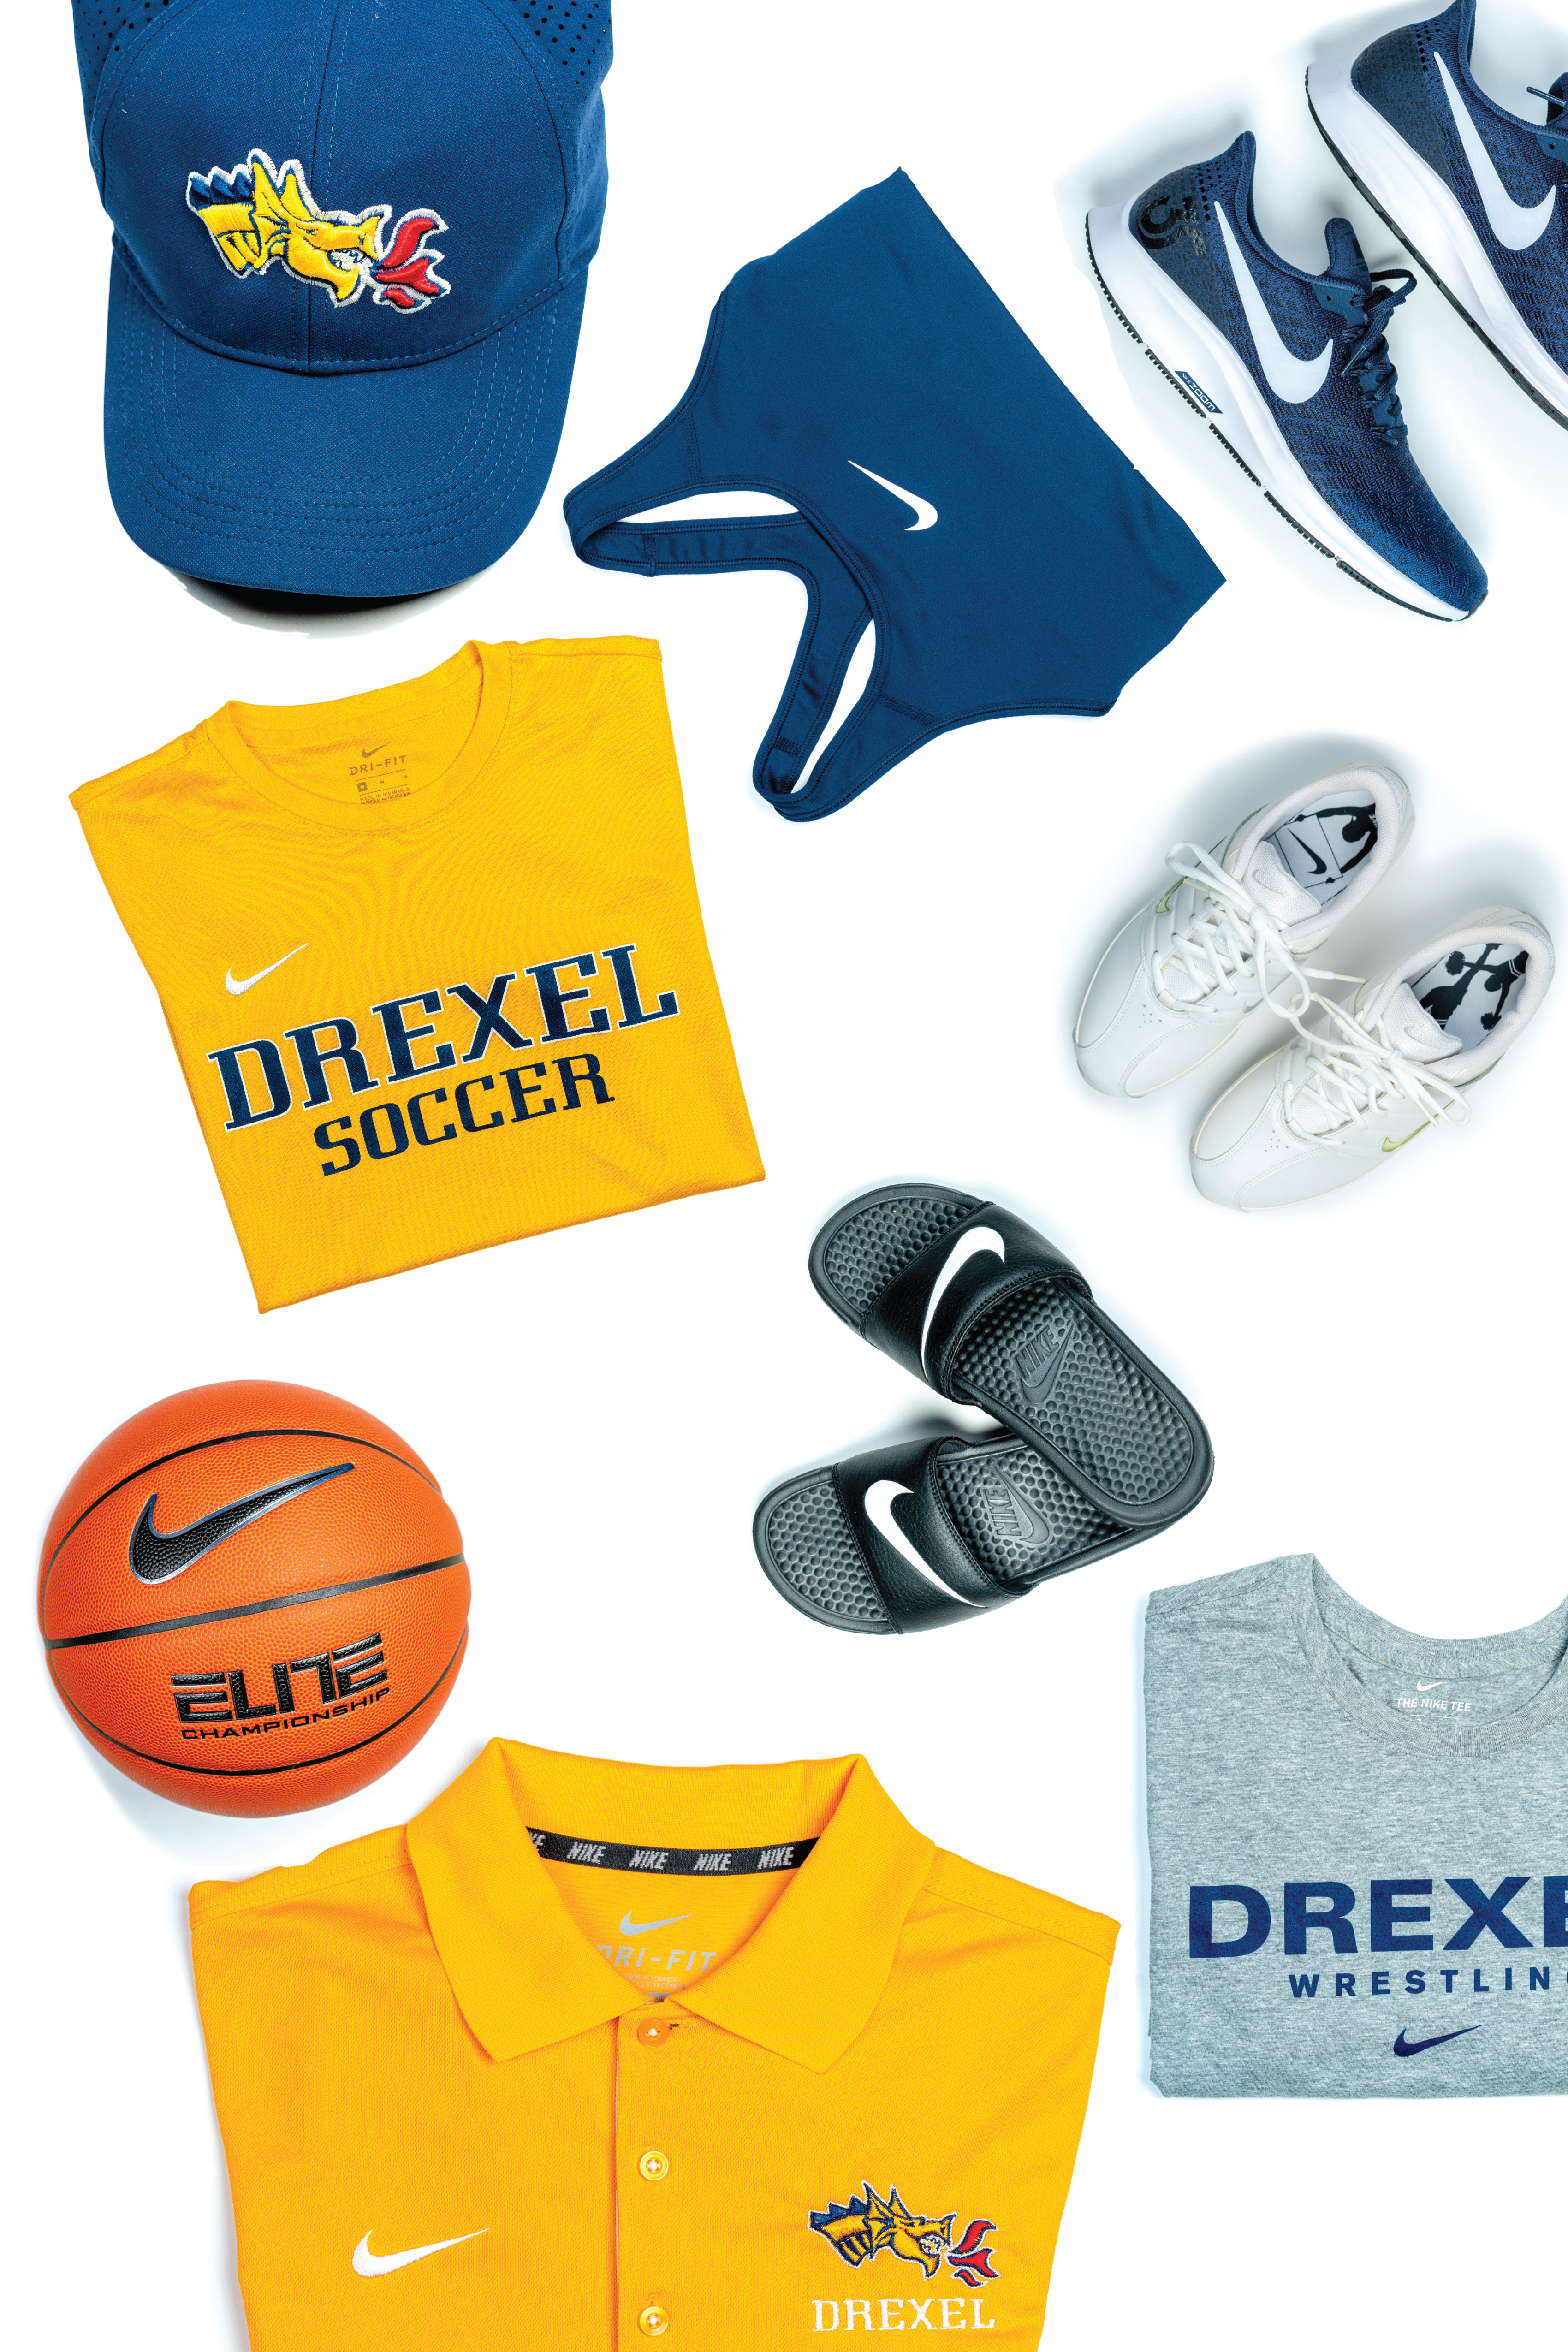 Drexel Athletic gear with Nike logo